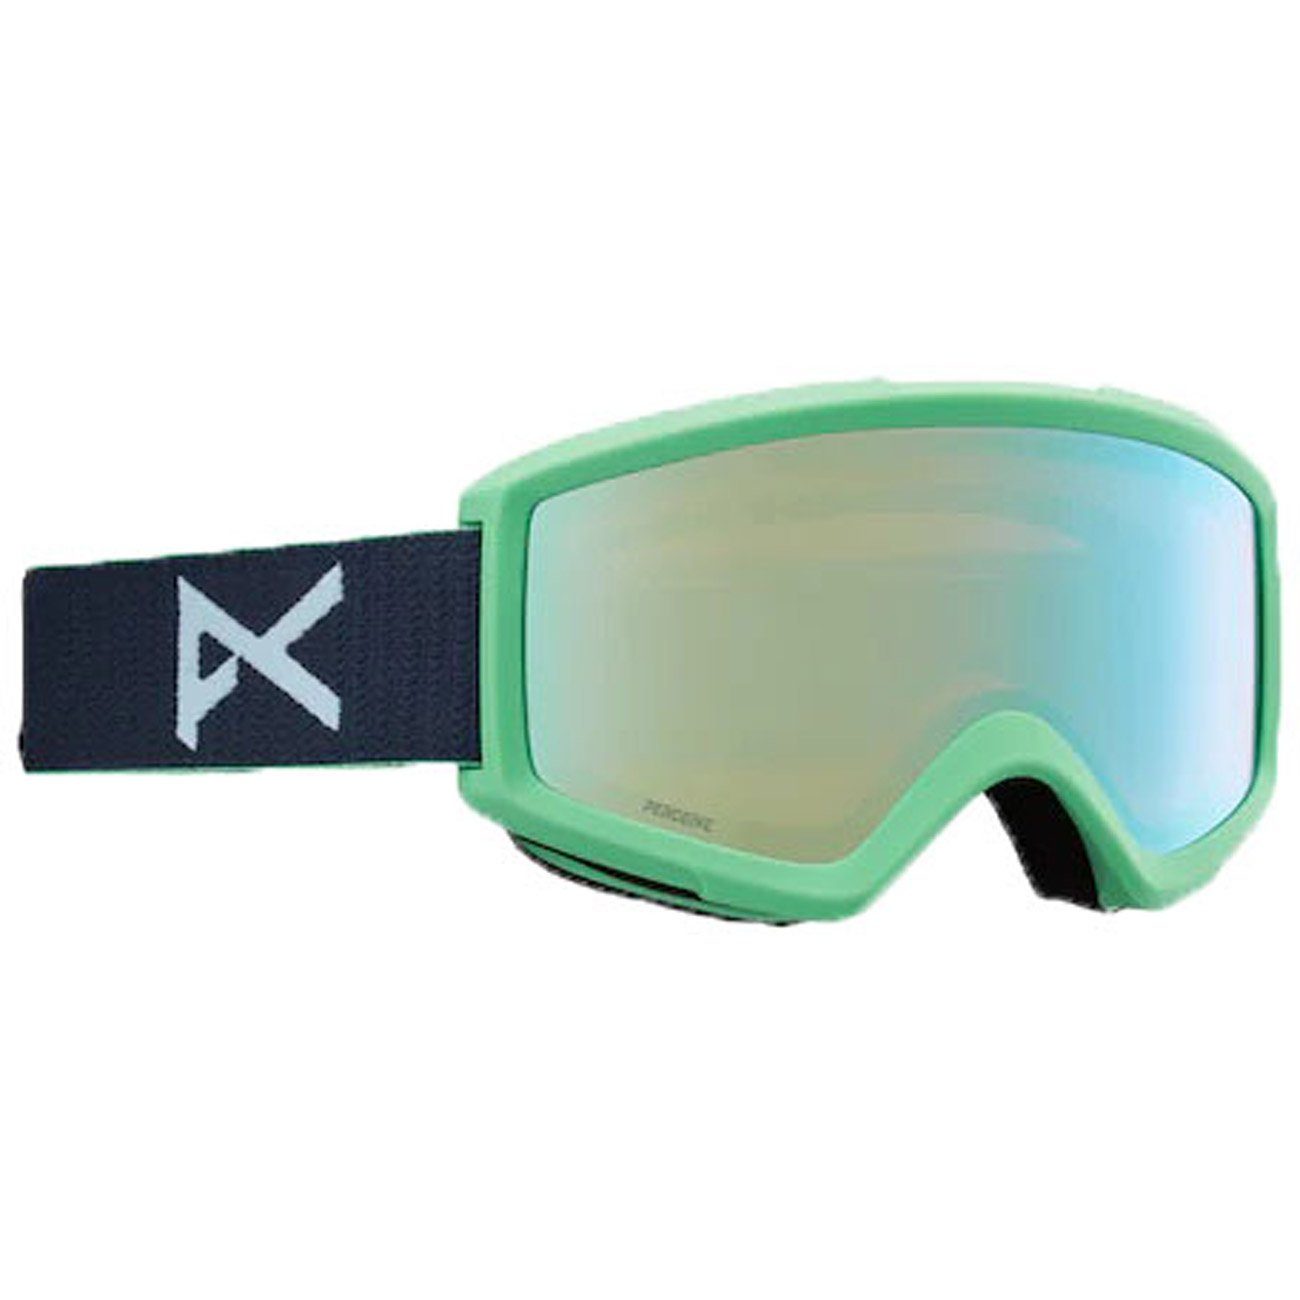 PERCEIVE HELIX 2 W/SPR Snowboardbrille, navy/prcv Anon blu vrbl